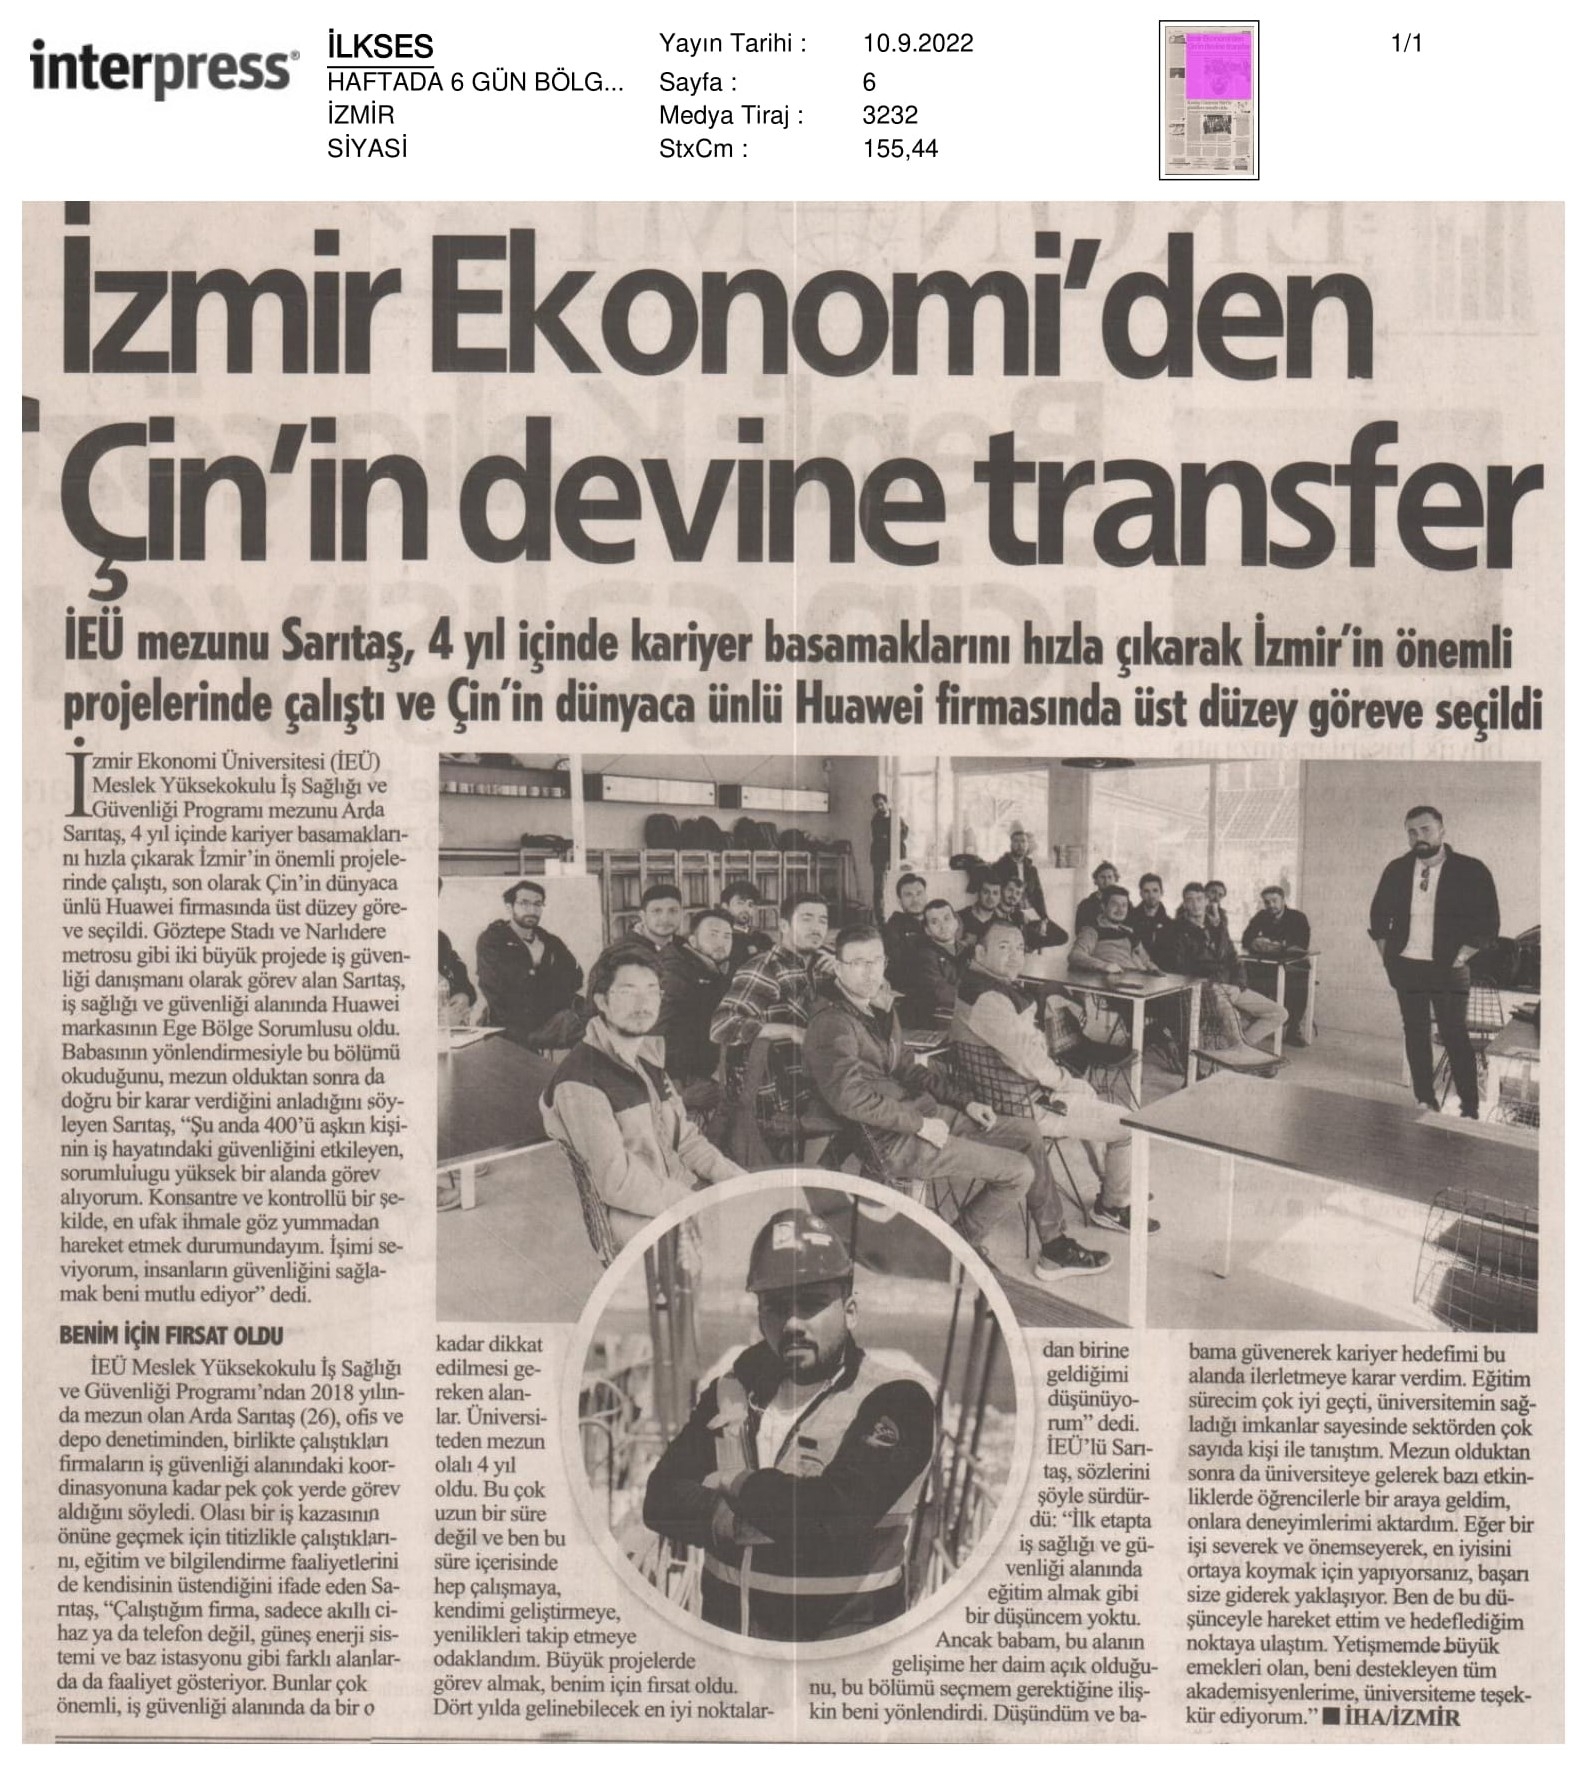 İzmir Ekonomi’den 'Çin'in devine’ transfer